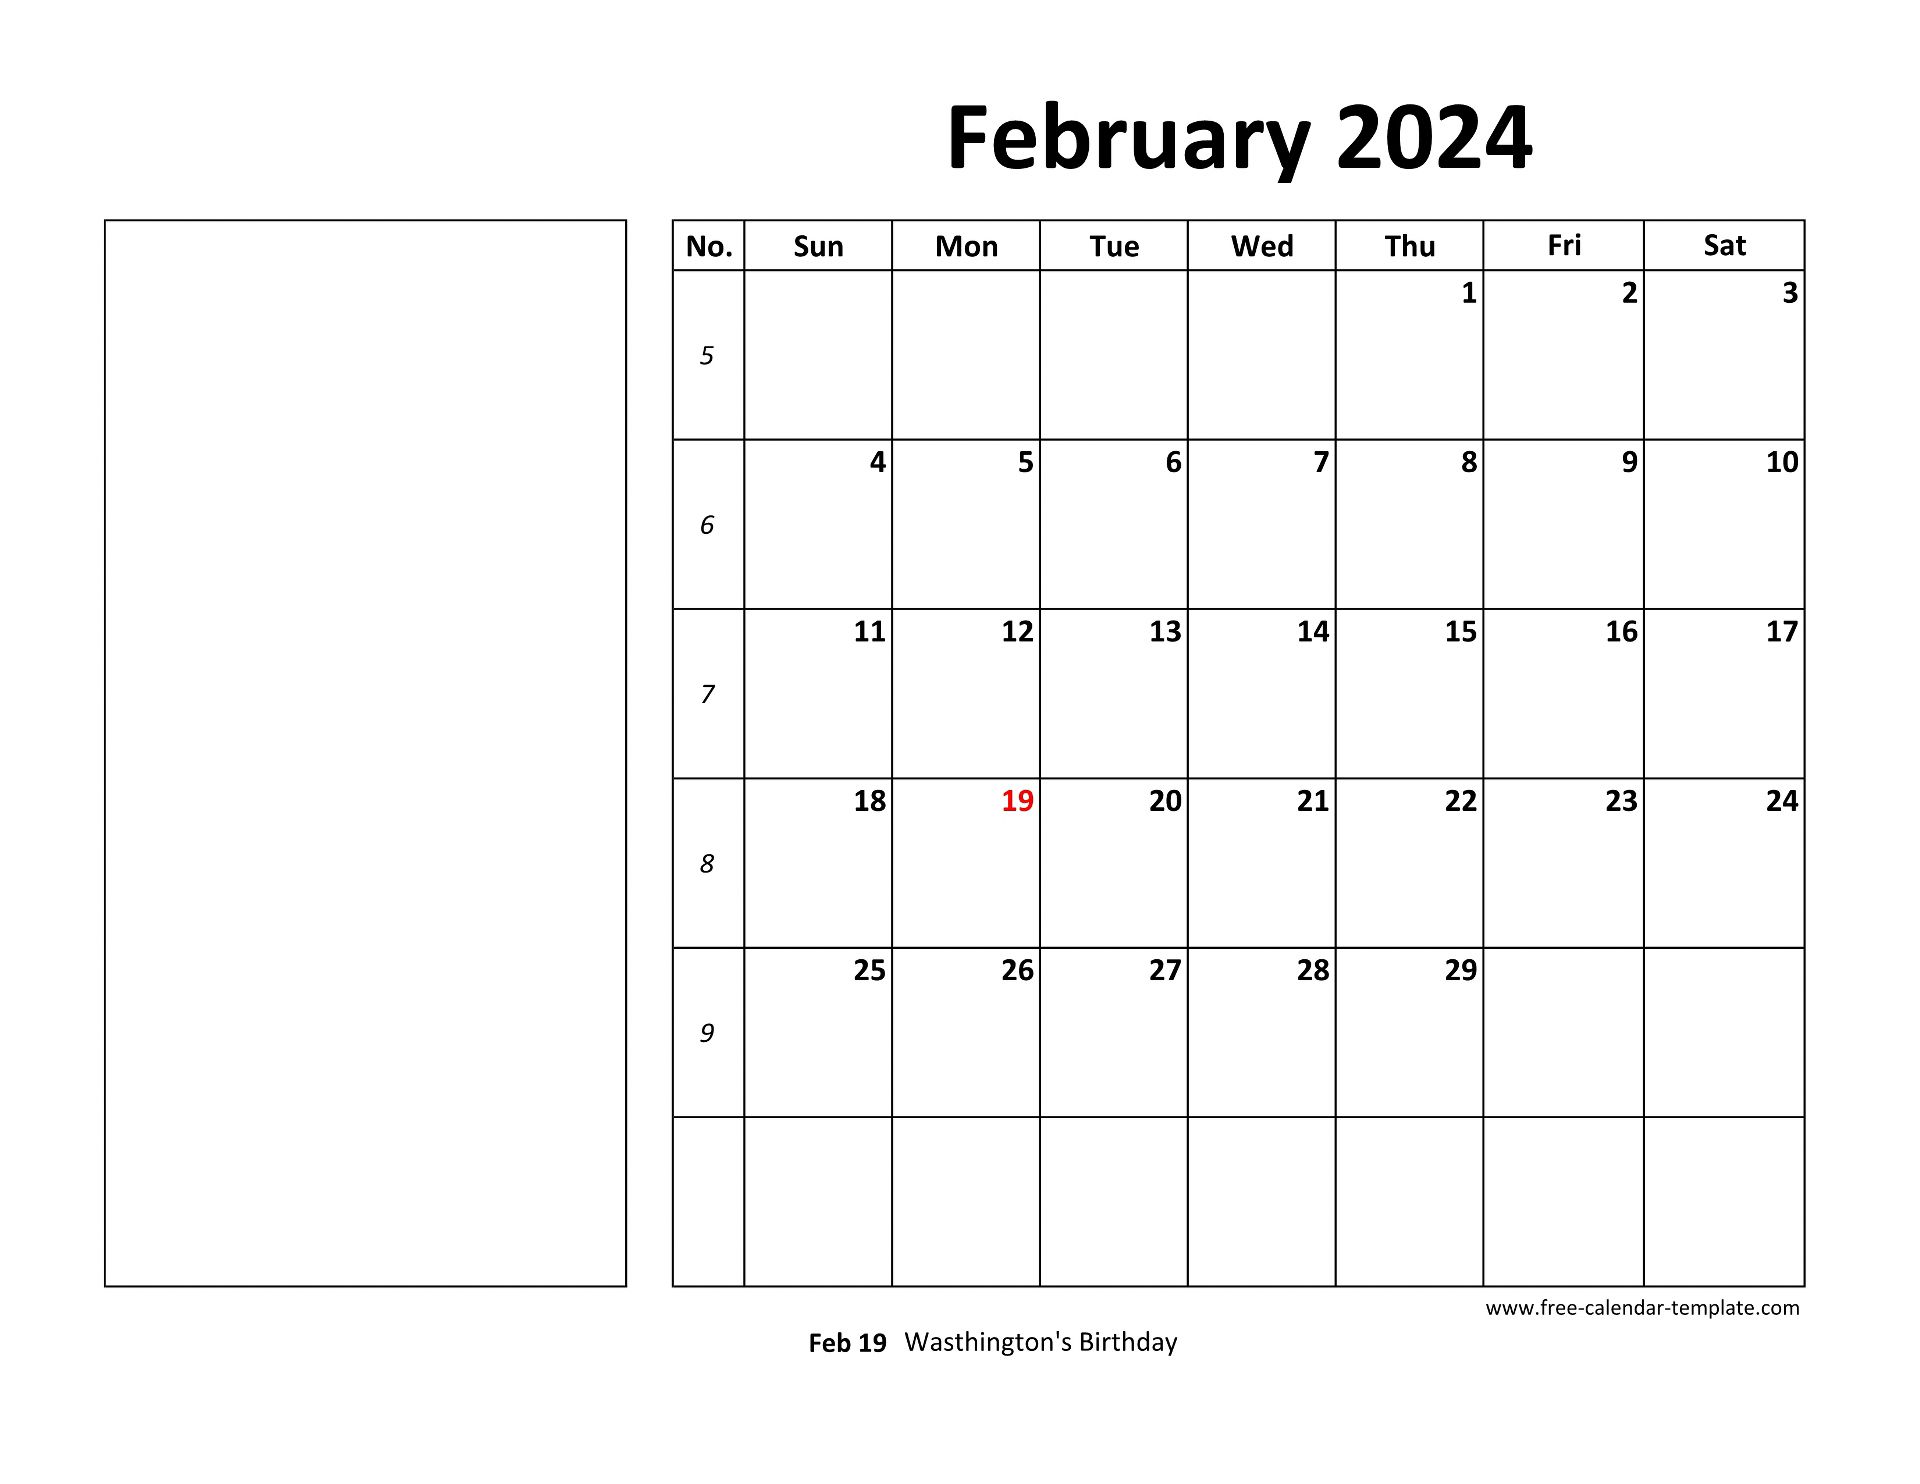 February 2024 Free Calendar Tempplate